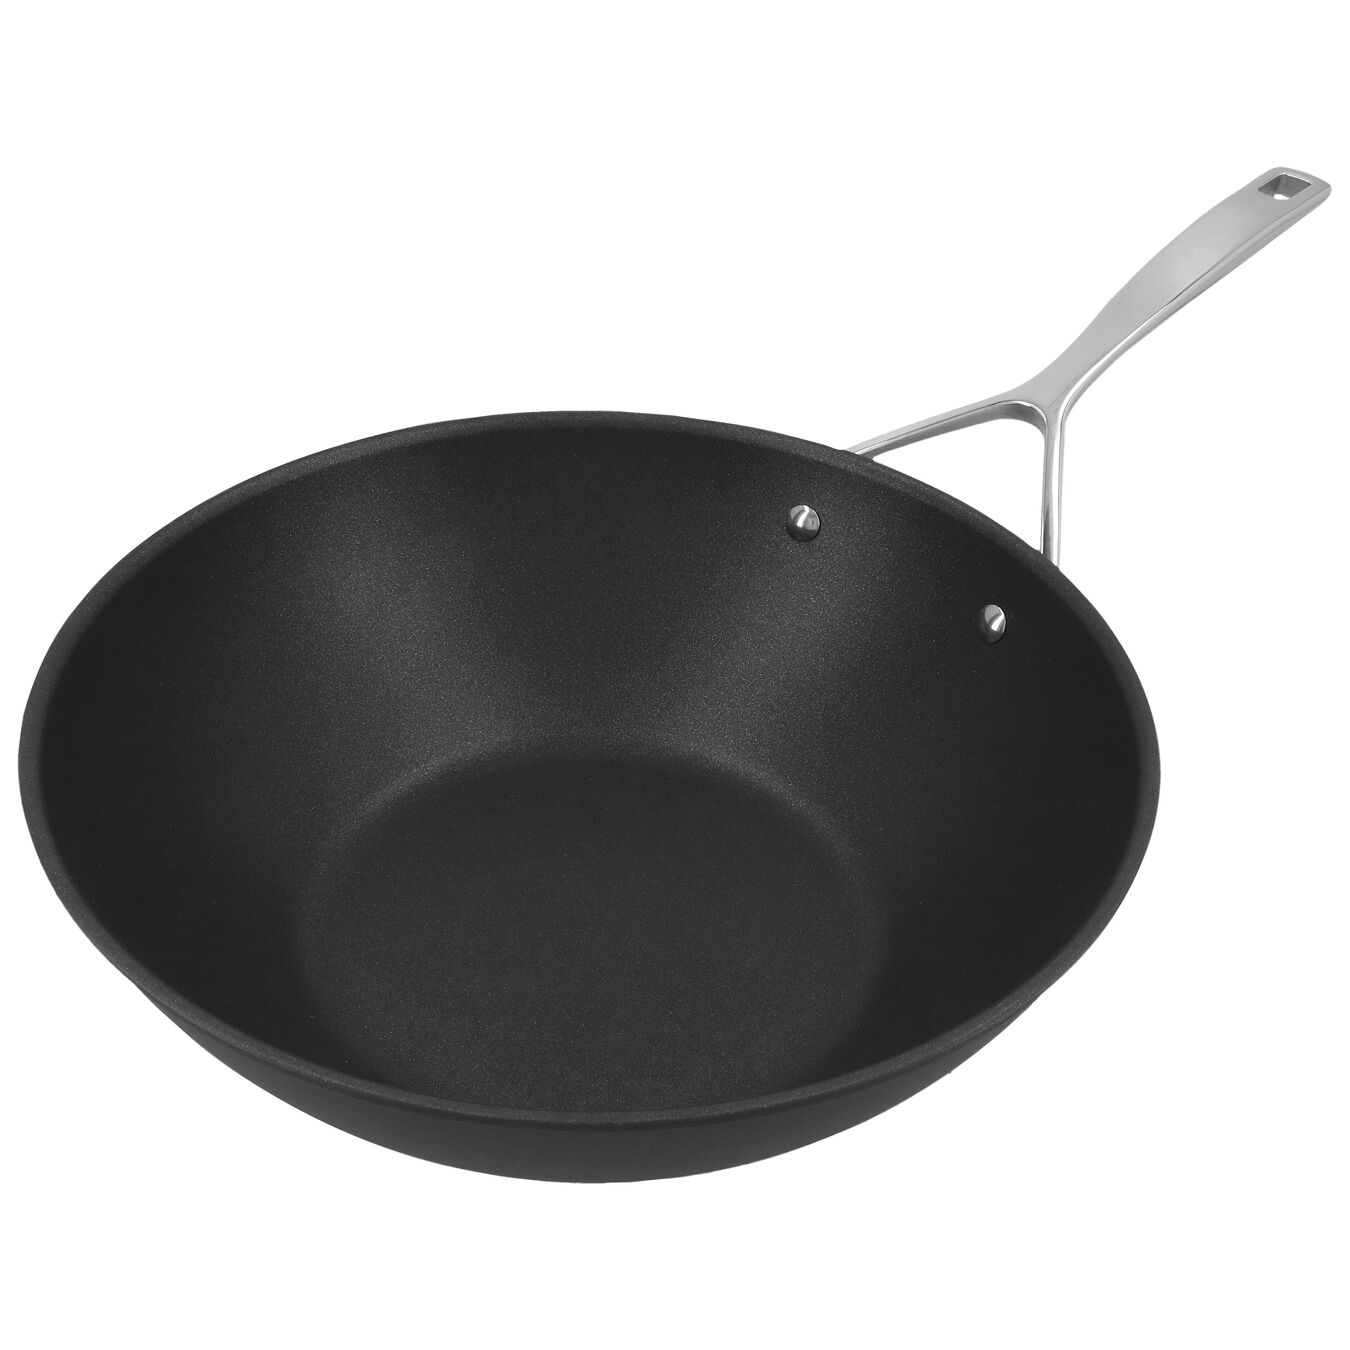 12-inch, aluminum, Nonstick Perfect Pan, silver-black,,large 2